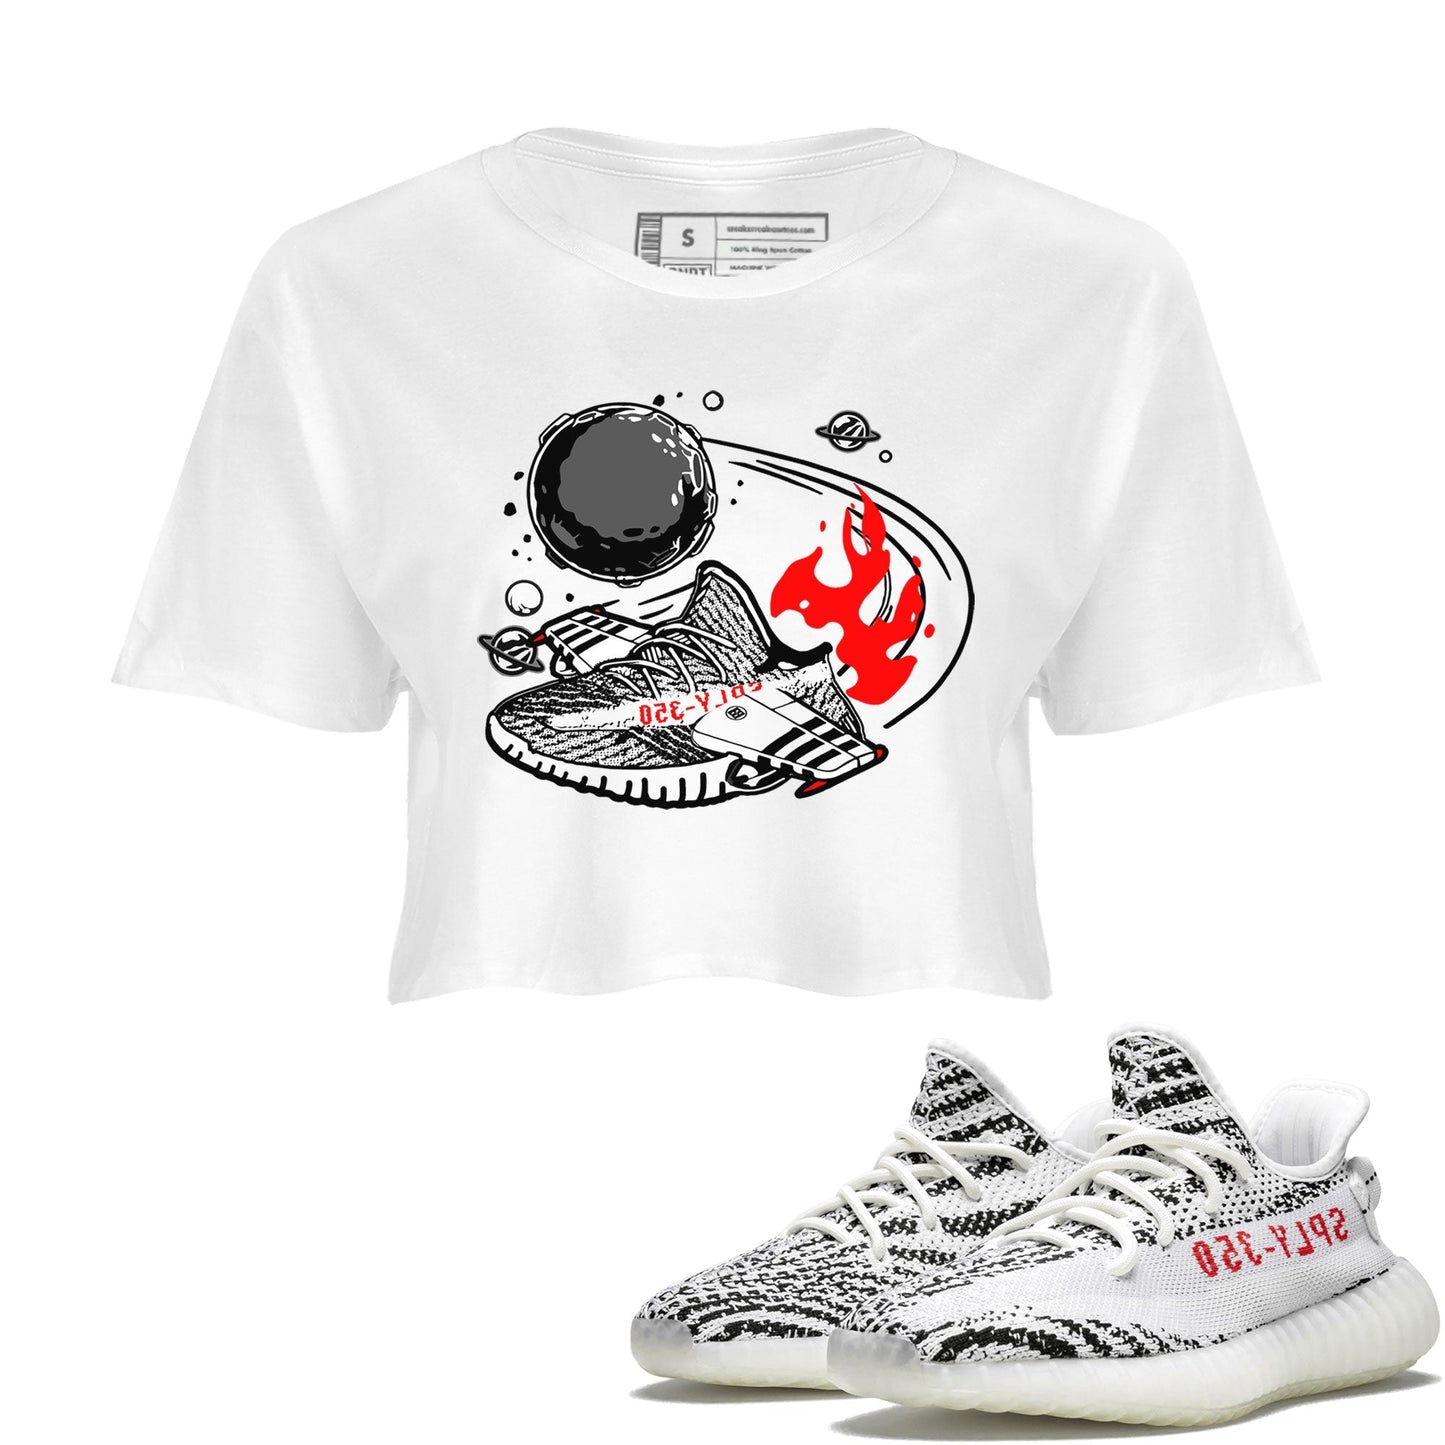 Yeezy 350 Zebra shirt to match Yeezys Rocket Boost Streetwear Sneaker Shirt Yeezy Boost 350 V2 Zebra Drip Gear Zone Sneaker Matching Clothing White 1 Crop T-Shirt